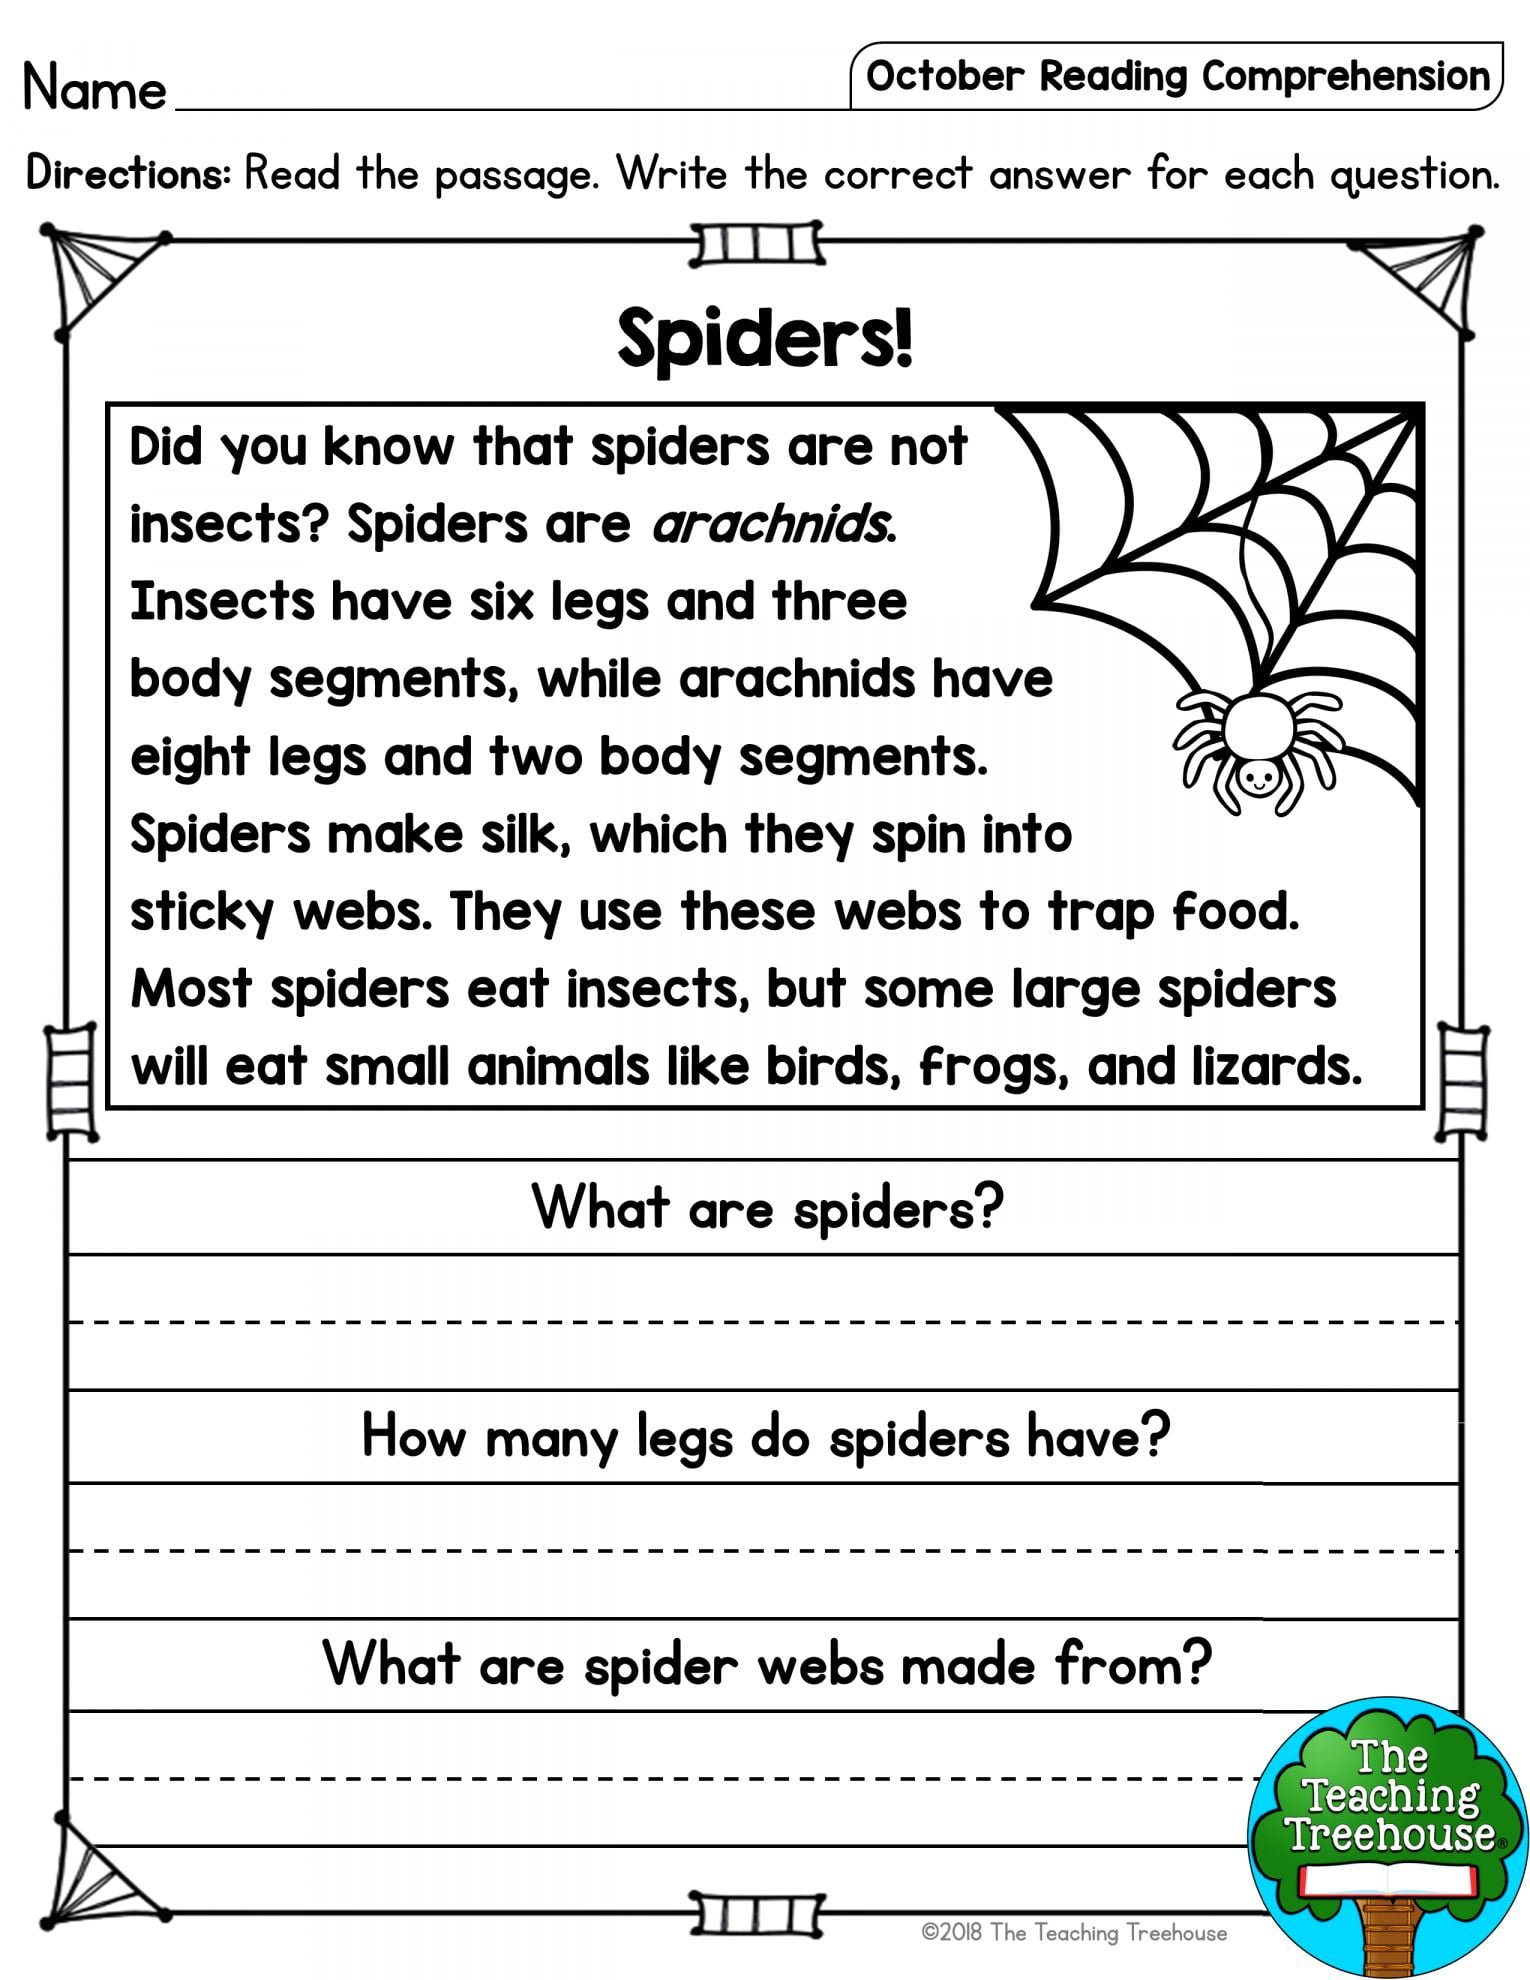 spider-web-reading-comprehension-worksheets-worksheetscity